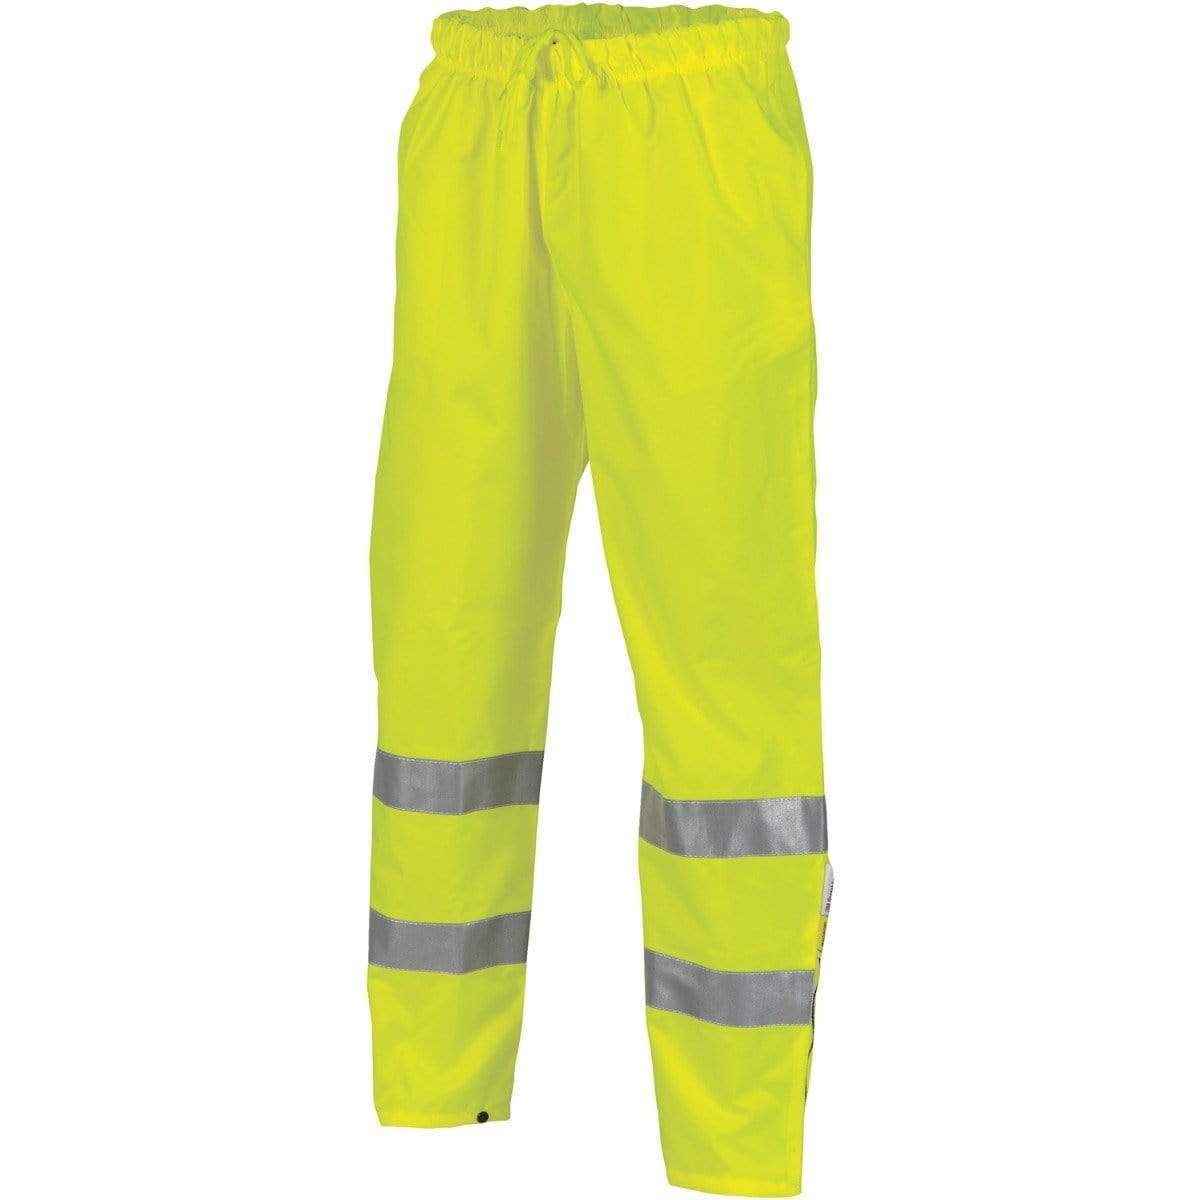 Dnc Workwear Hi-vis D/n Breathable Rain Pants With 3m Reflective Tape - 3872 Work Wear DNC Workwear Yellow S 